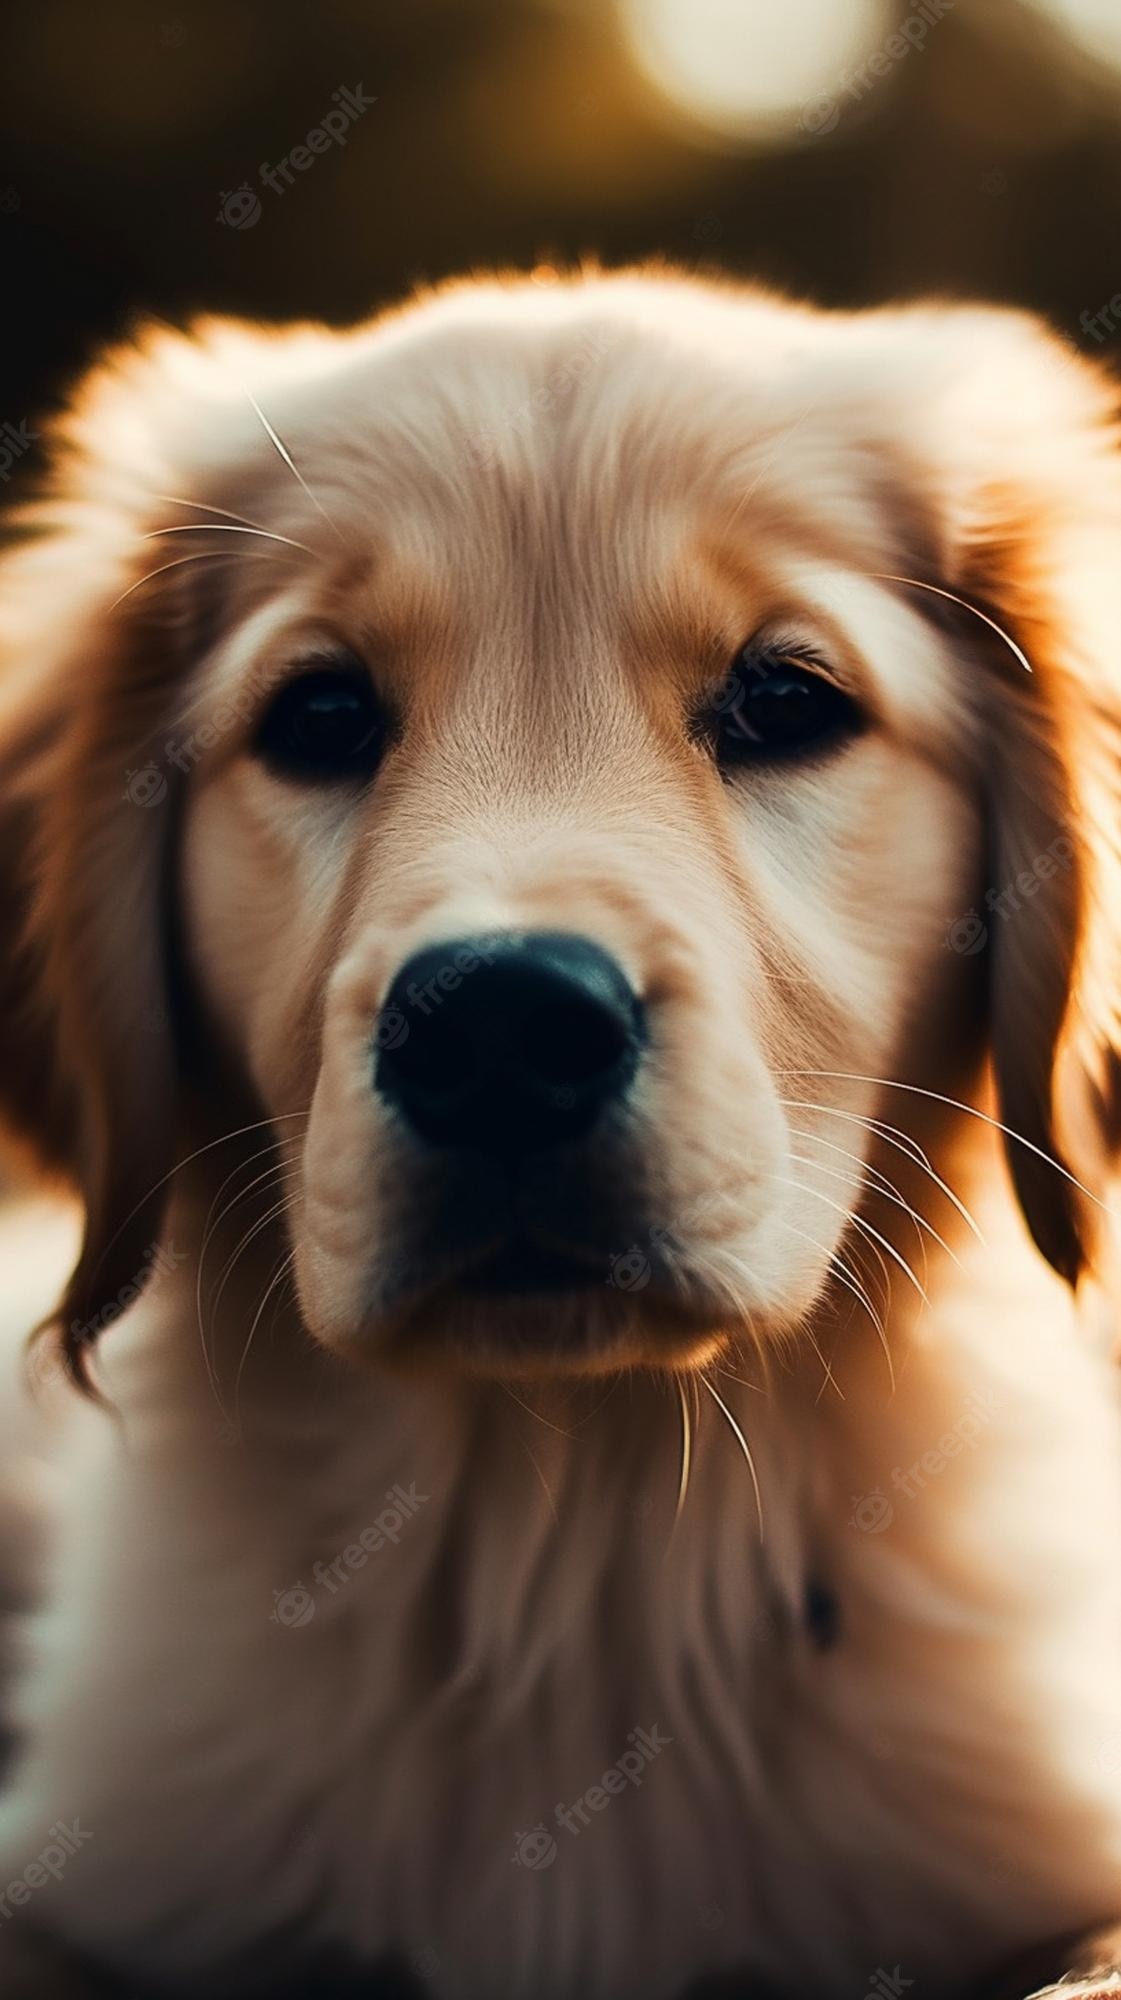 Premium Photo. Golden retriever puppy wallpaper that will make your day